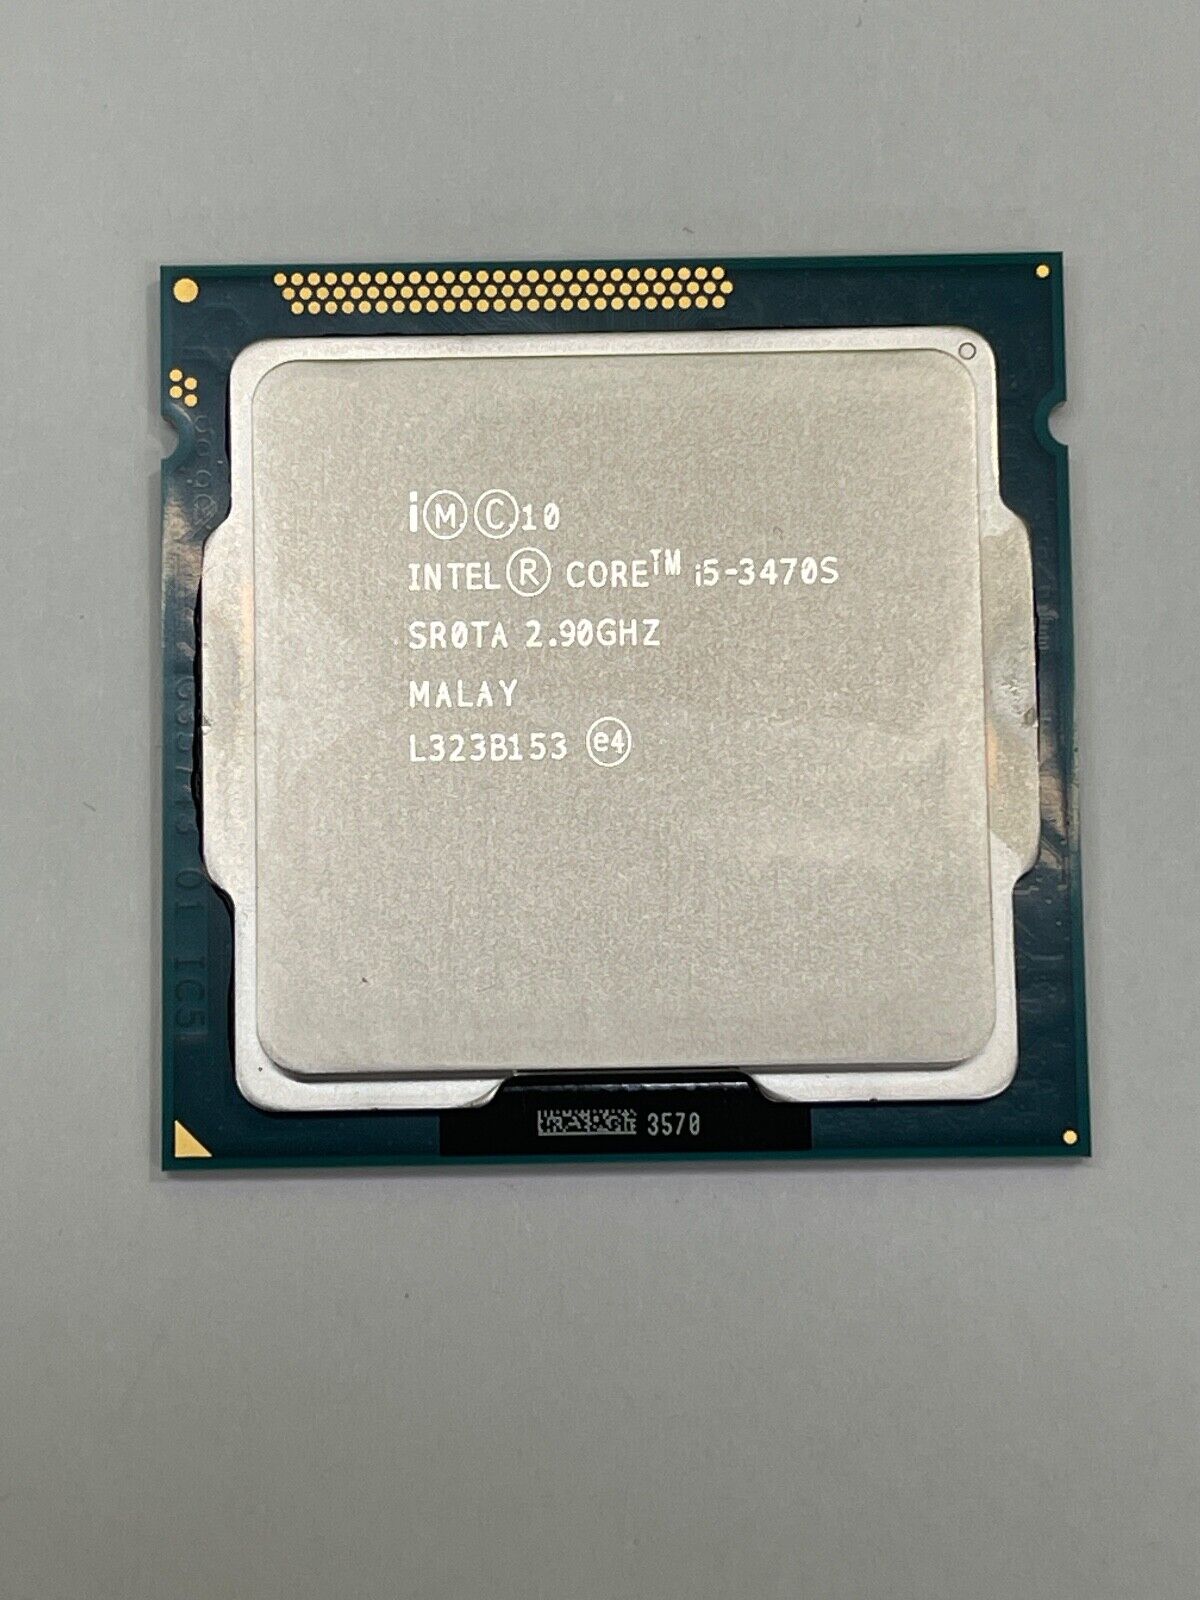 Intel Core i5-3470S 2.9GHz 3rd Gen - Quad Core - Desktop CPU SR0TA